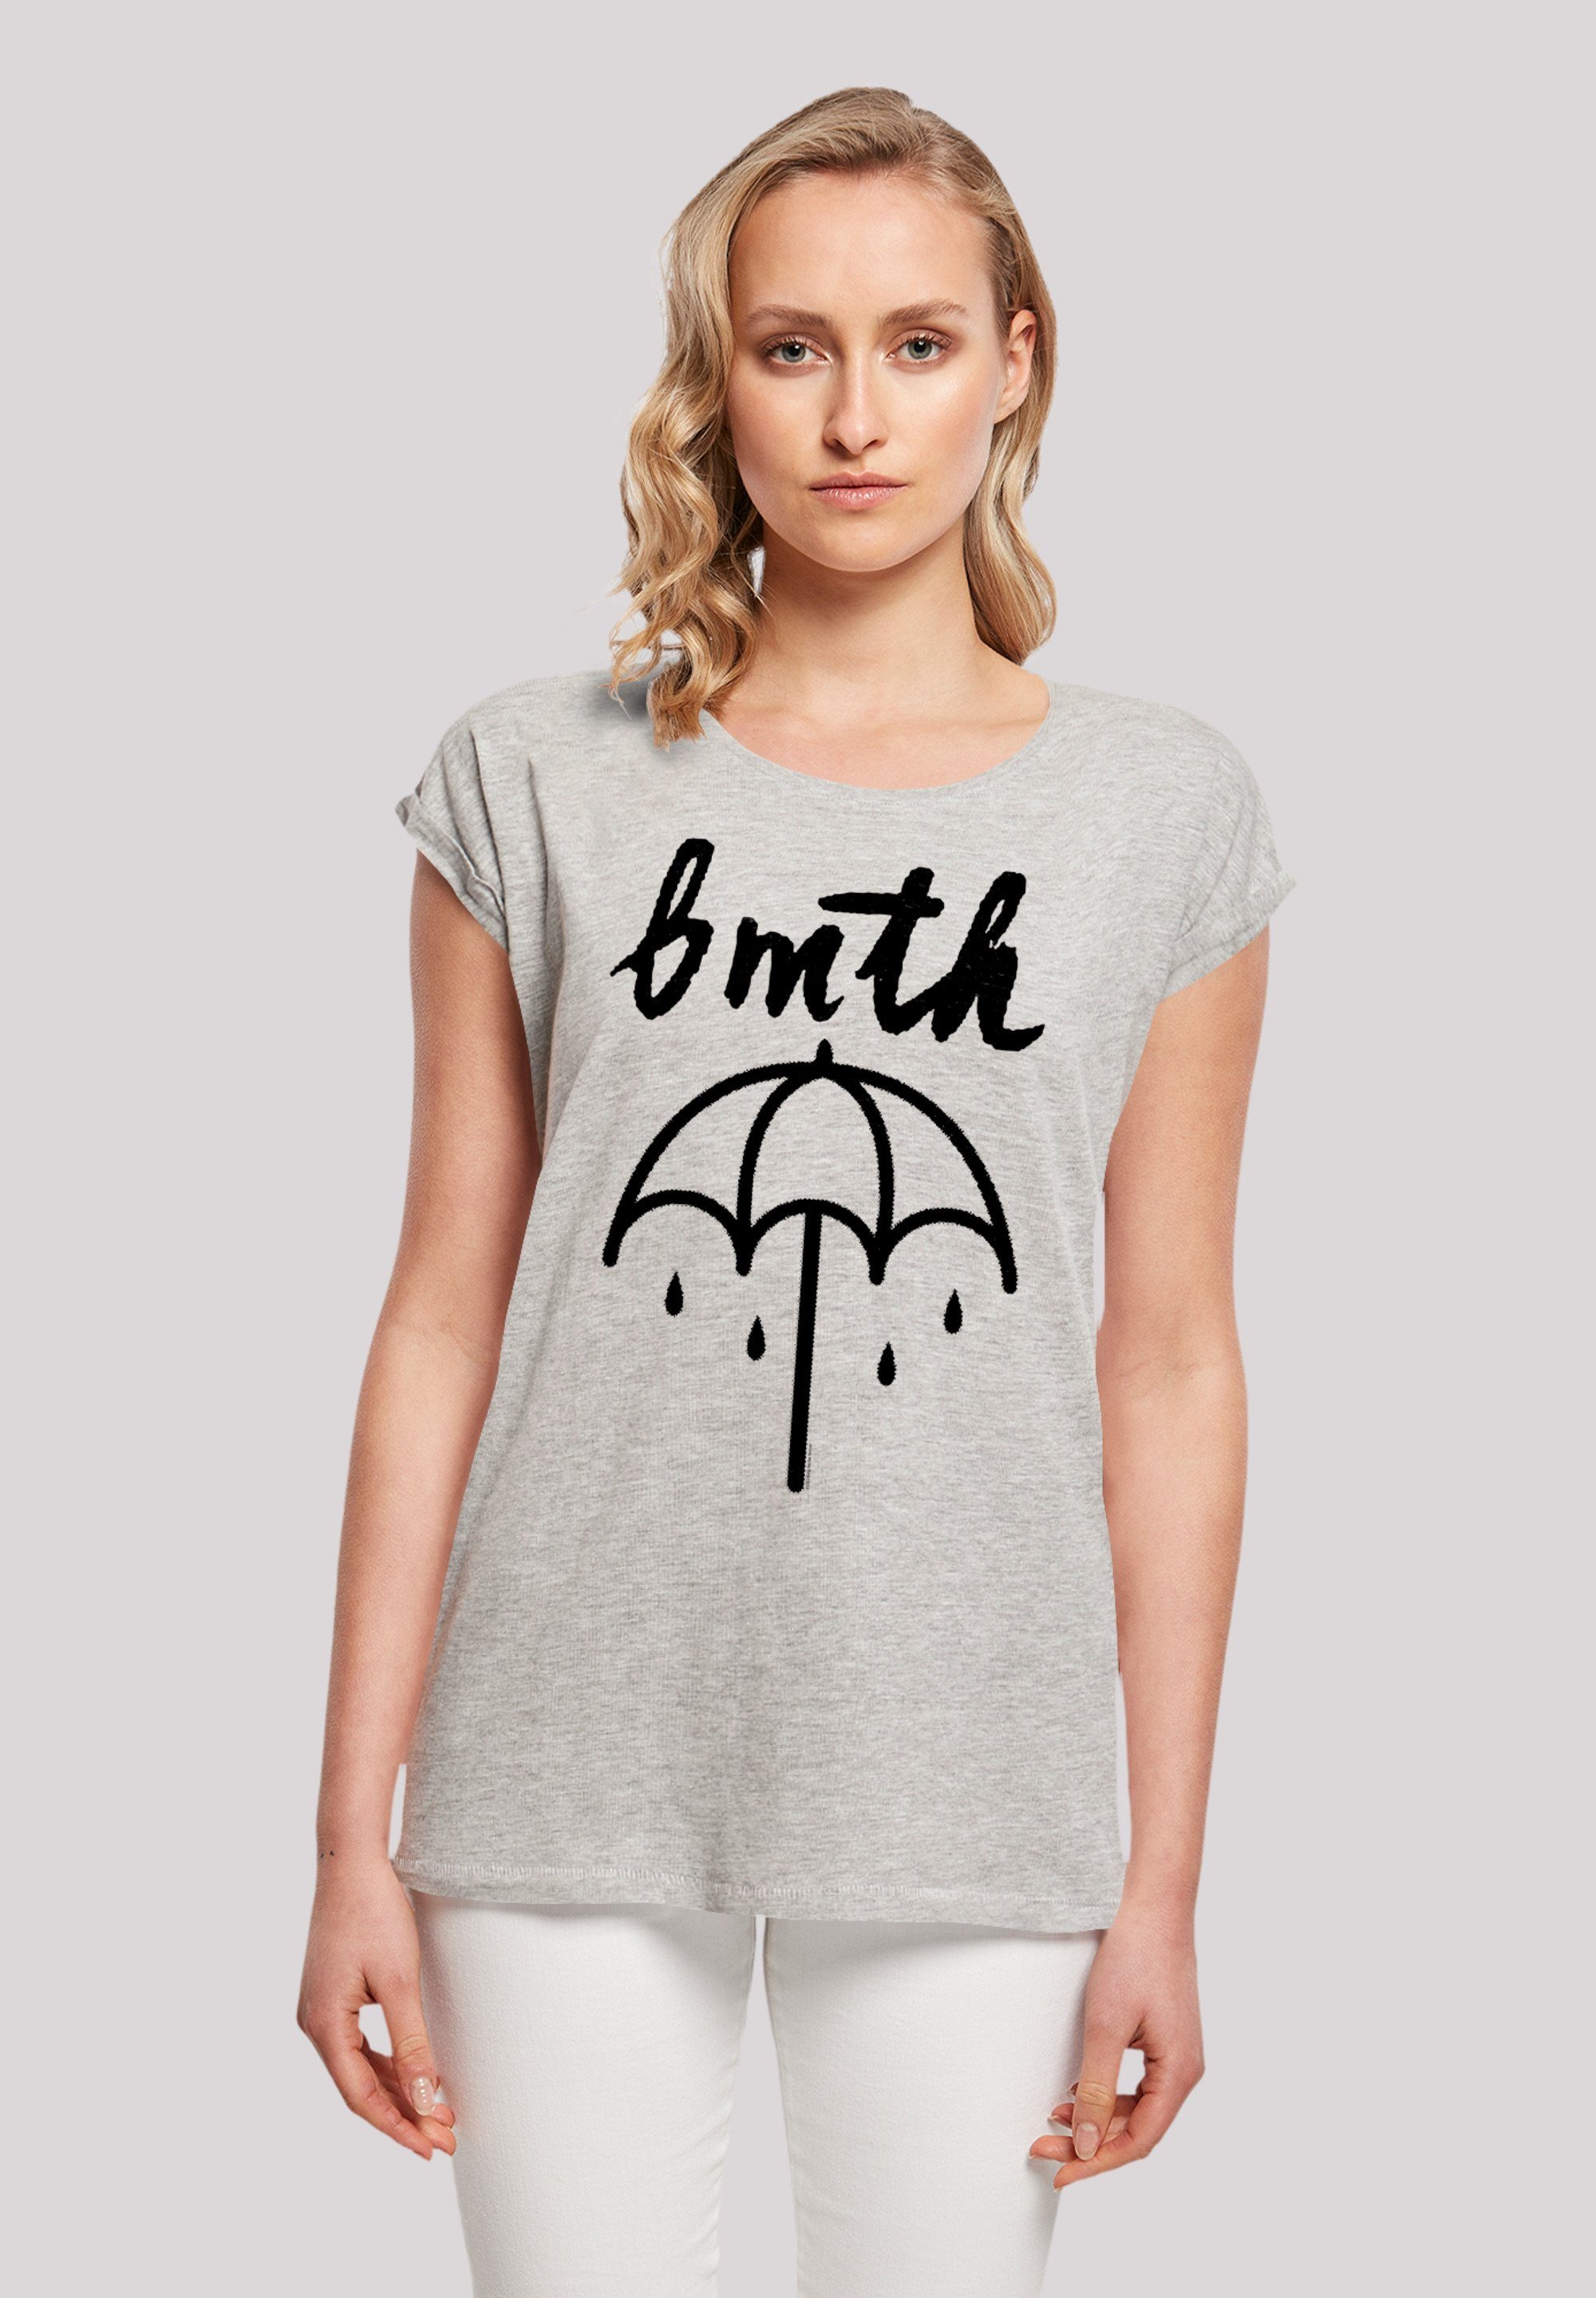 Band Qualität, Umbrella T-Shirt BMTH F4NT4STIC heather grey Rock-Musik, Band Metal Premium